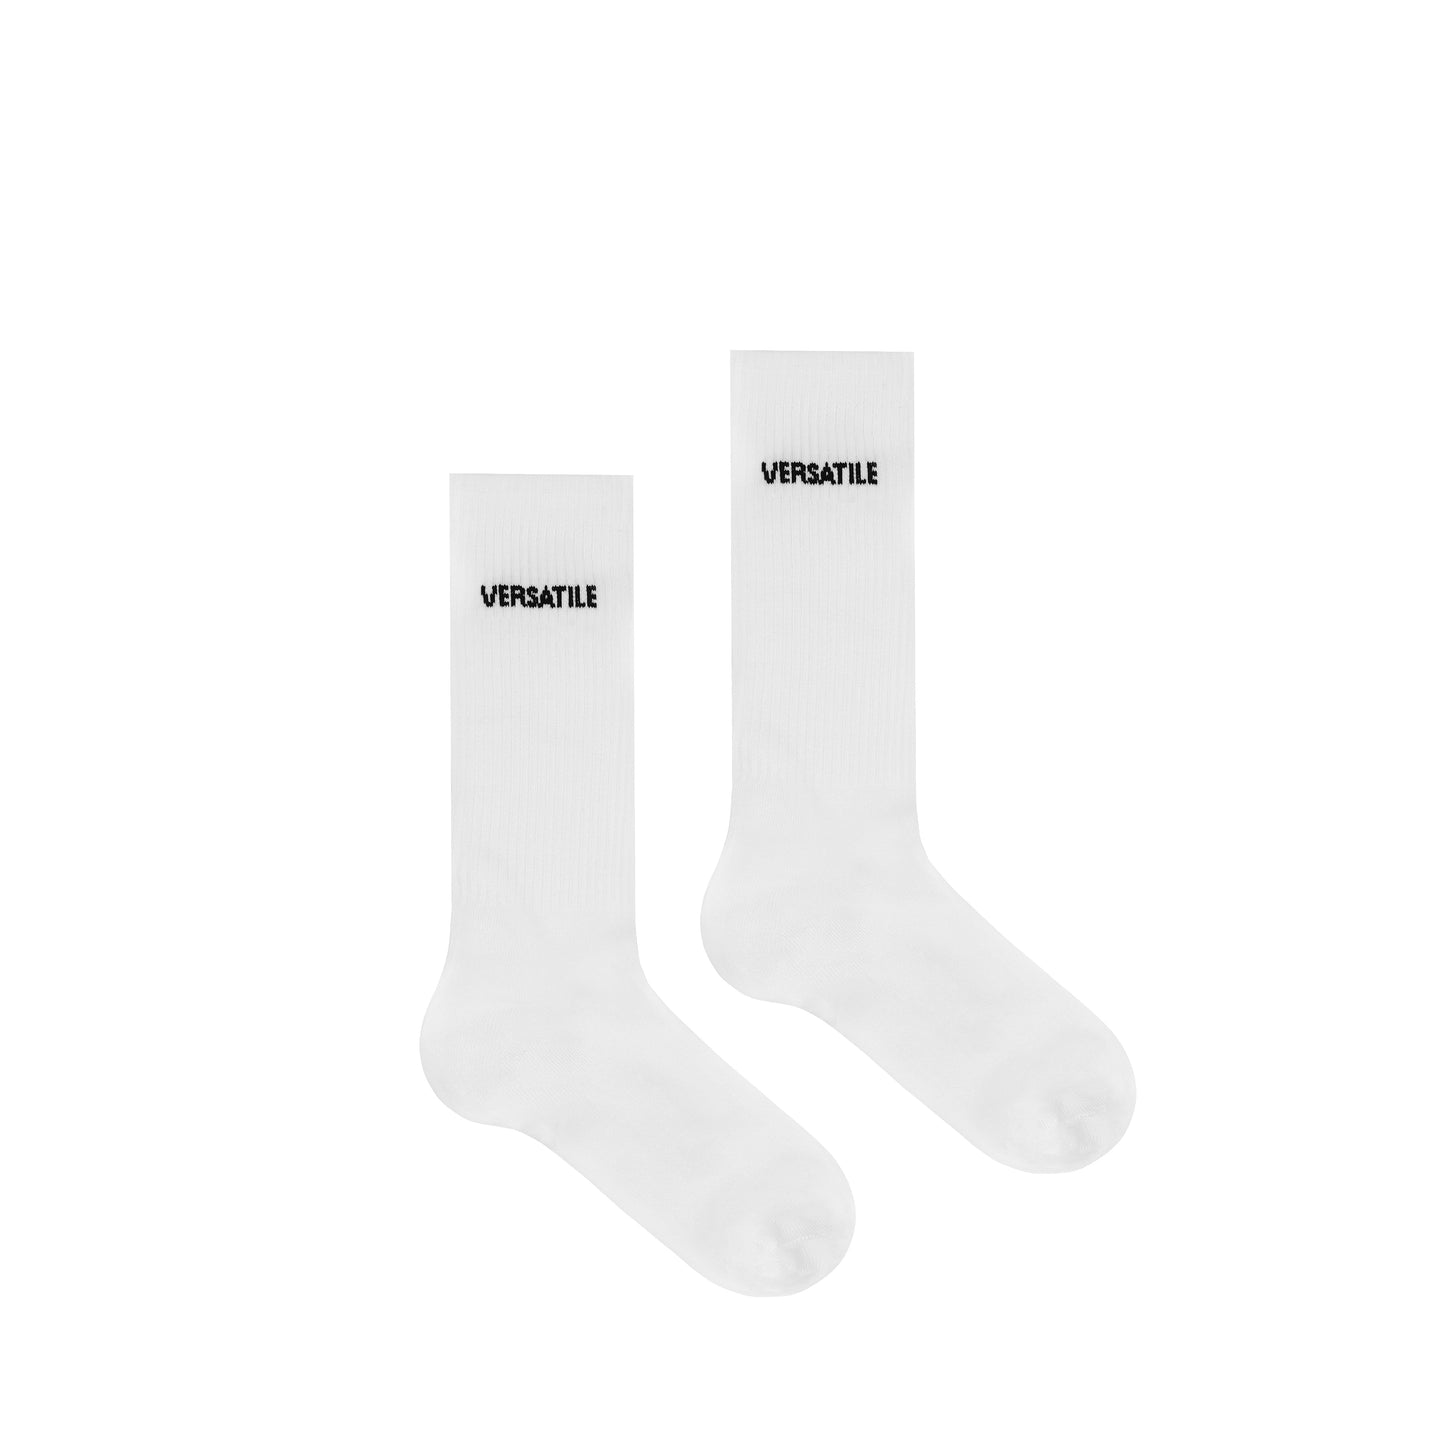 untitled#08 Socks (Versatile White)